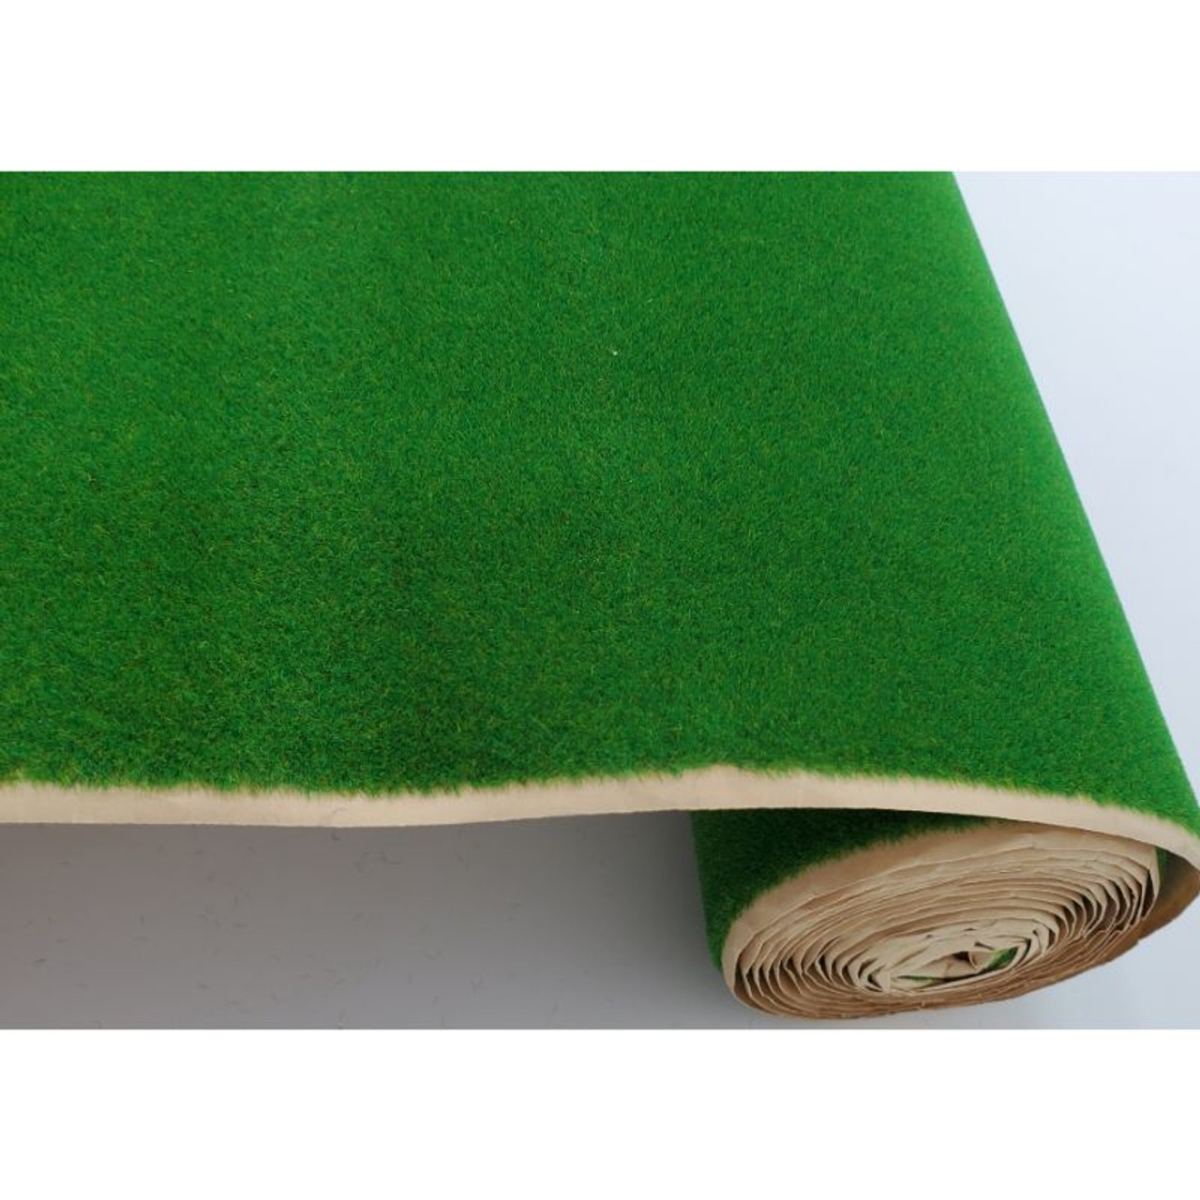 Picture of Rock Island Hobby RIH024400 39 x 98 in. Multi Scale Grass Mat, Dark Green